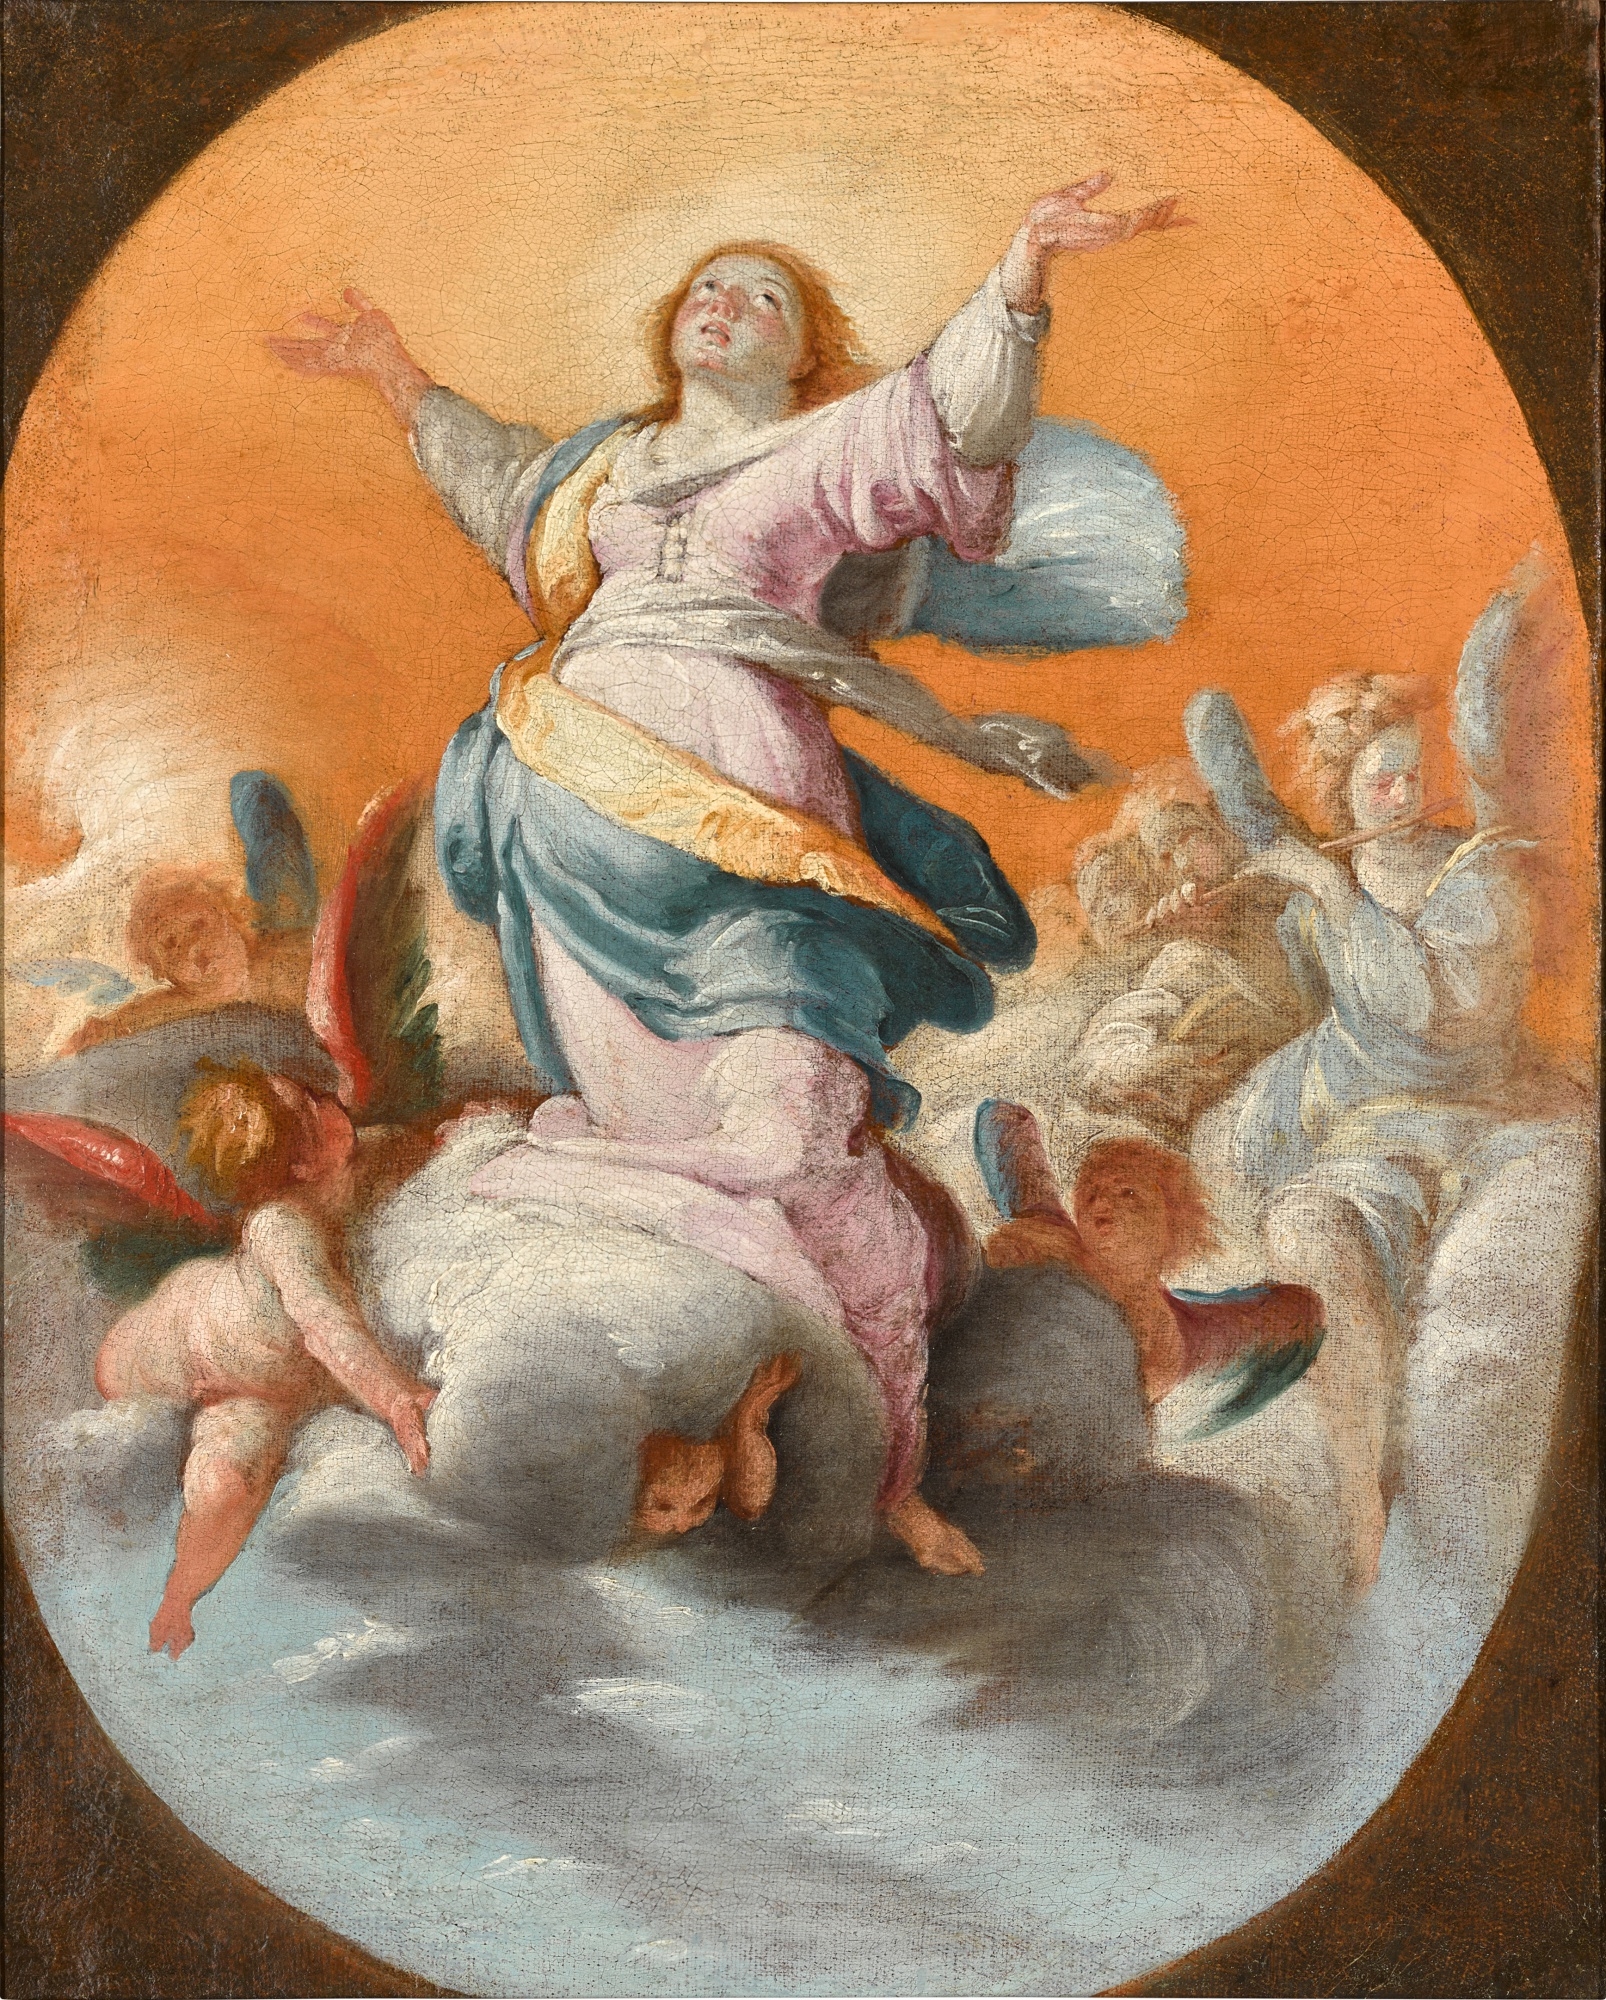 The Assumption of the Virgin by Bernardo Strozzi